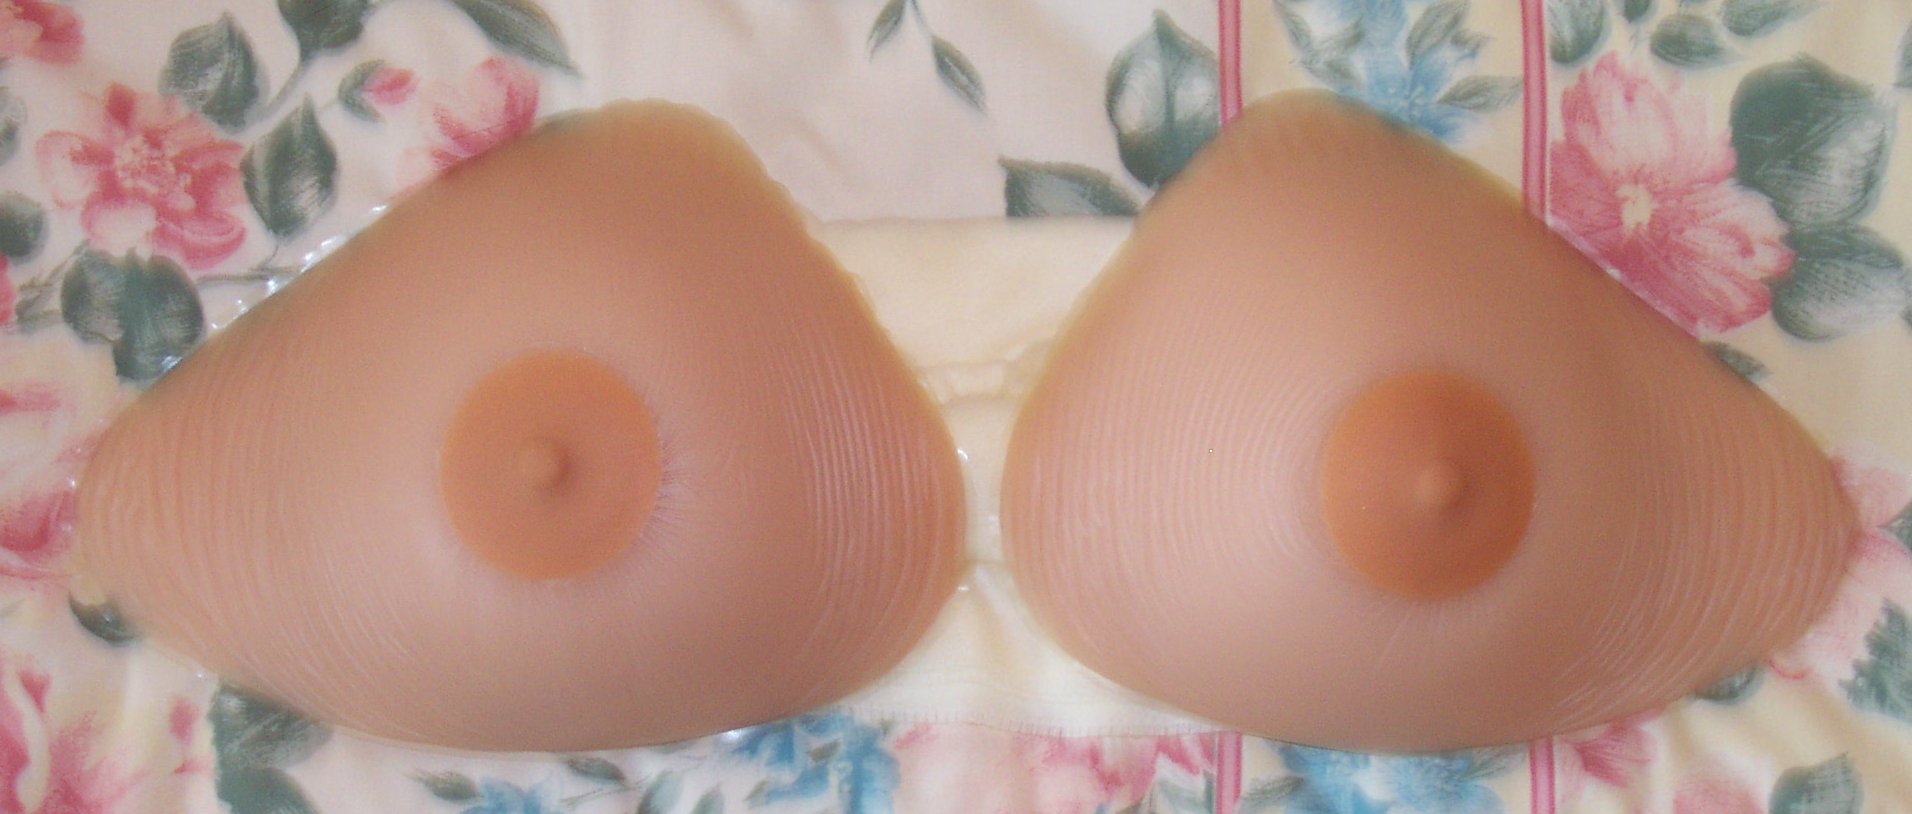 File:Discrene Breast forms.JPG